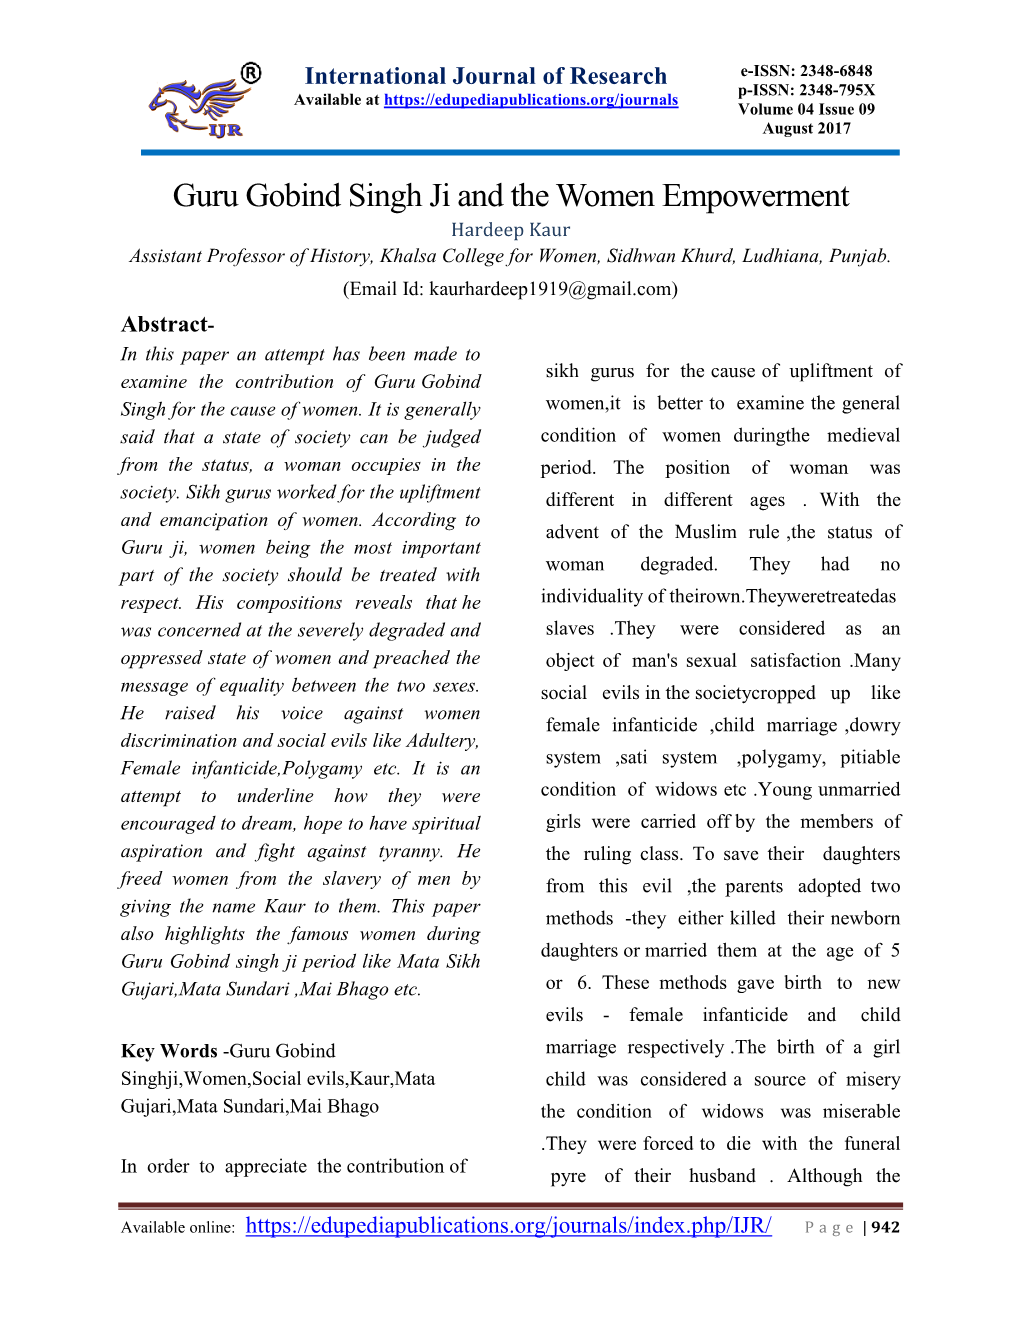 Guru Gobind Singh Ji and the Women Empowerment Hardeep Kaur Assistant Professor of History, Khalsa College for Women, Sidhwan Khurd, Ludhiana, Punjab